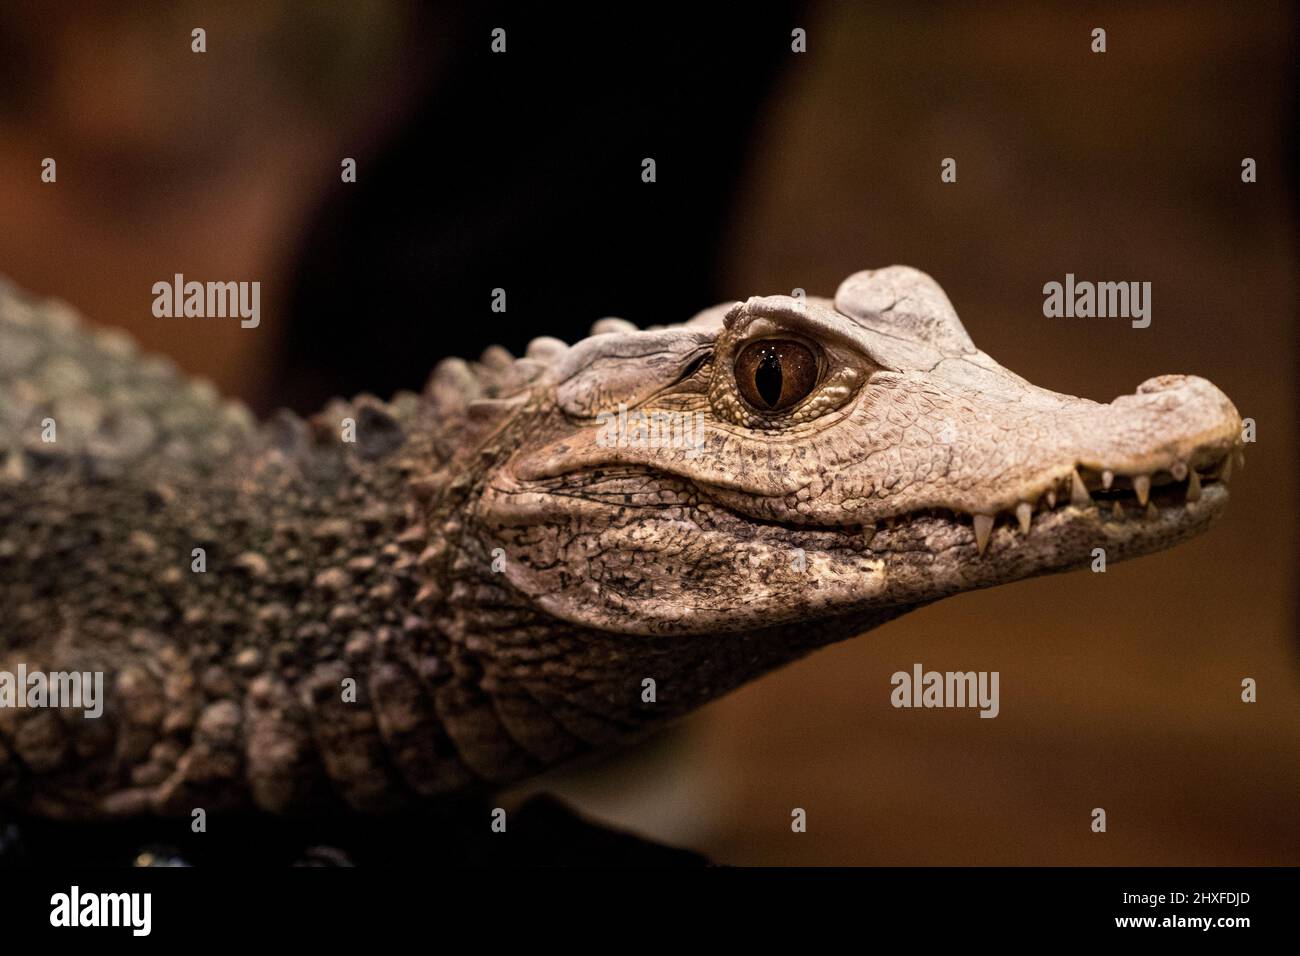 Caiman close up alligator. Stock Photo